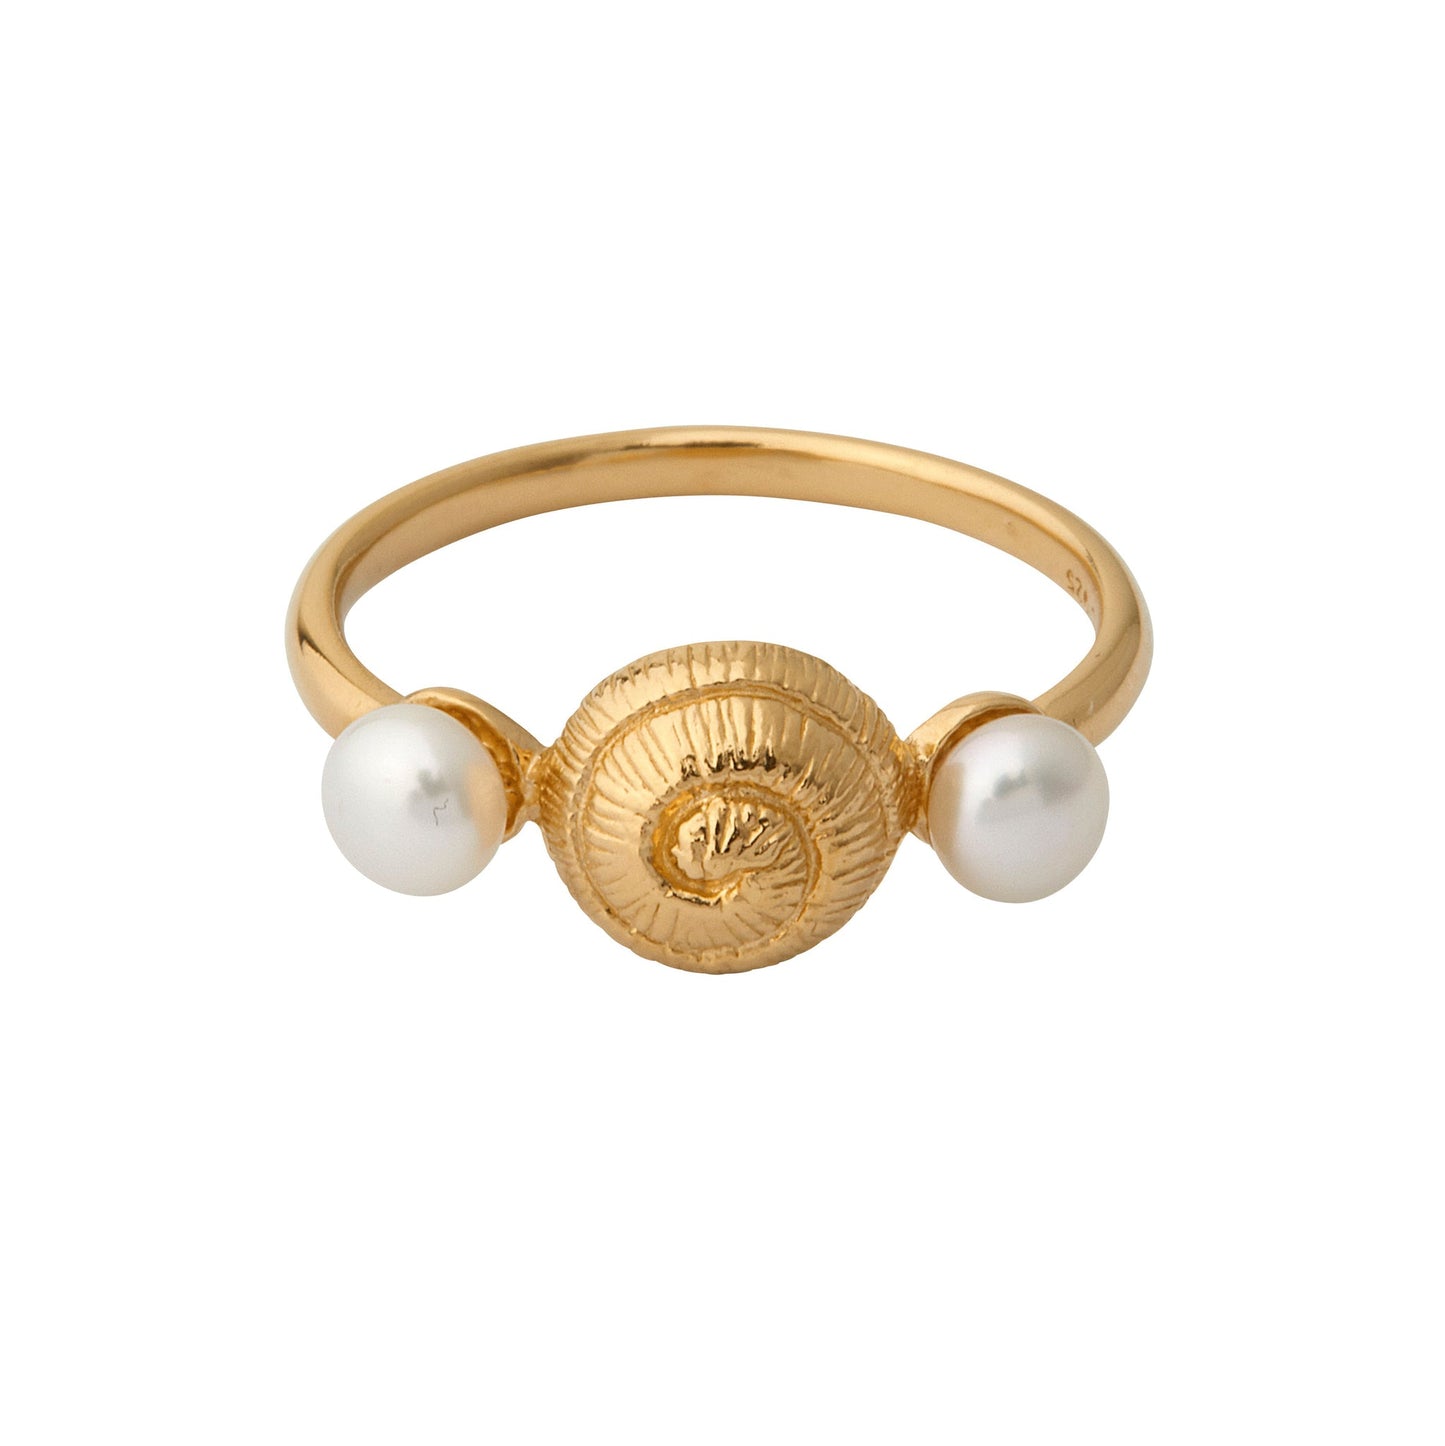 Sprial & Pearls Ring - 14 Karat Gold